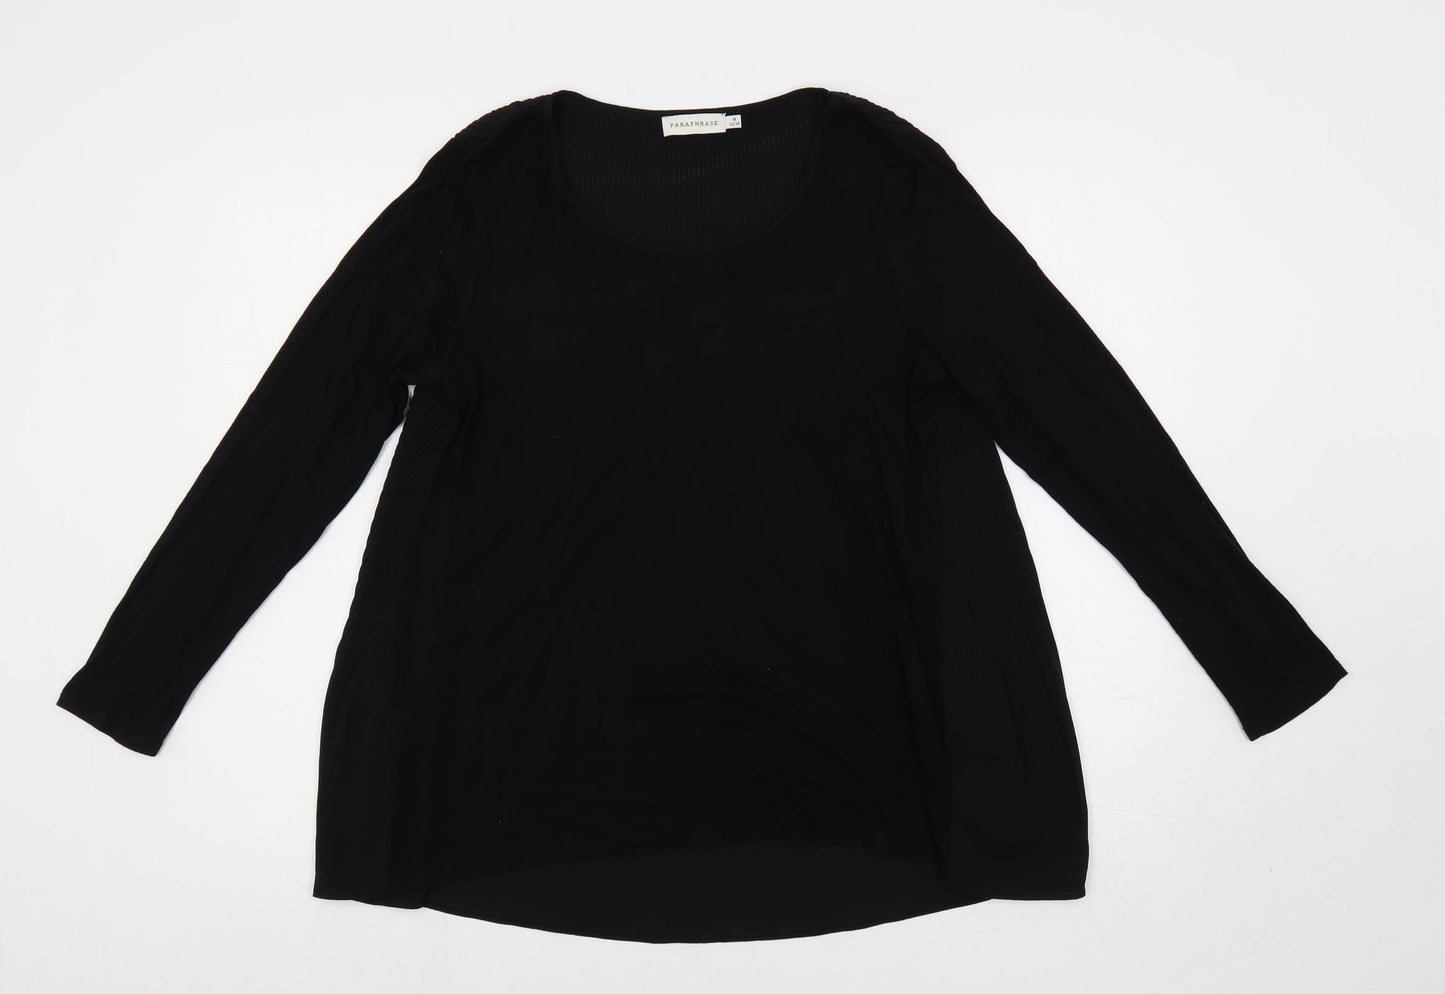 Paraphrase Womens Black Polyester Basic Blouse Size M Round Neck